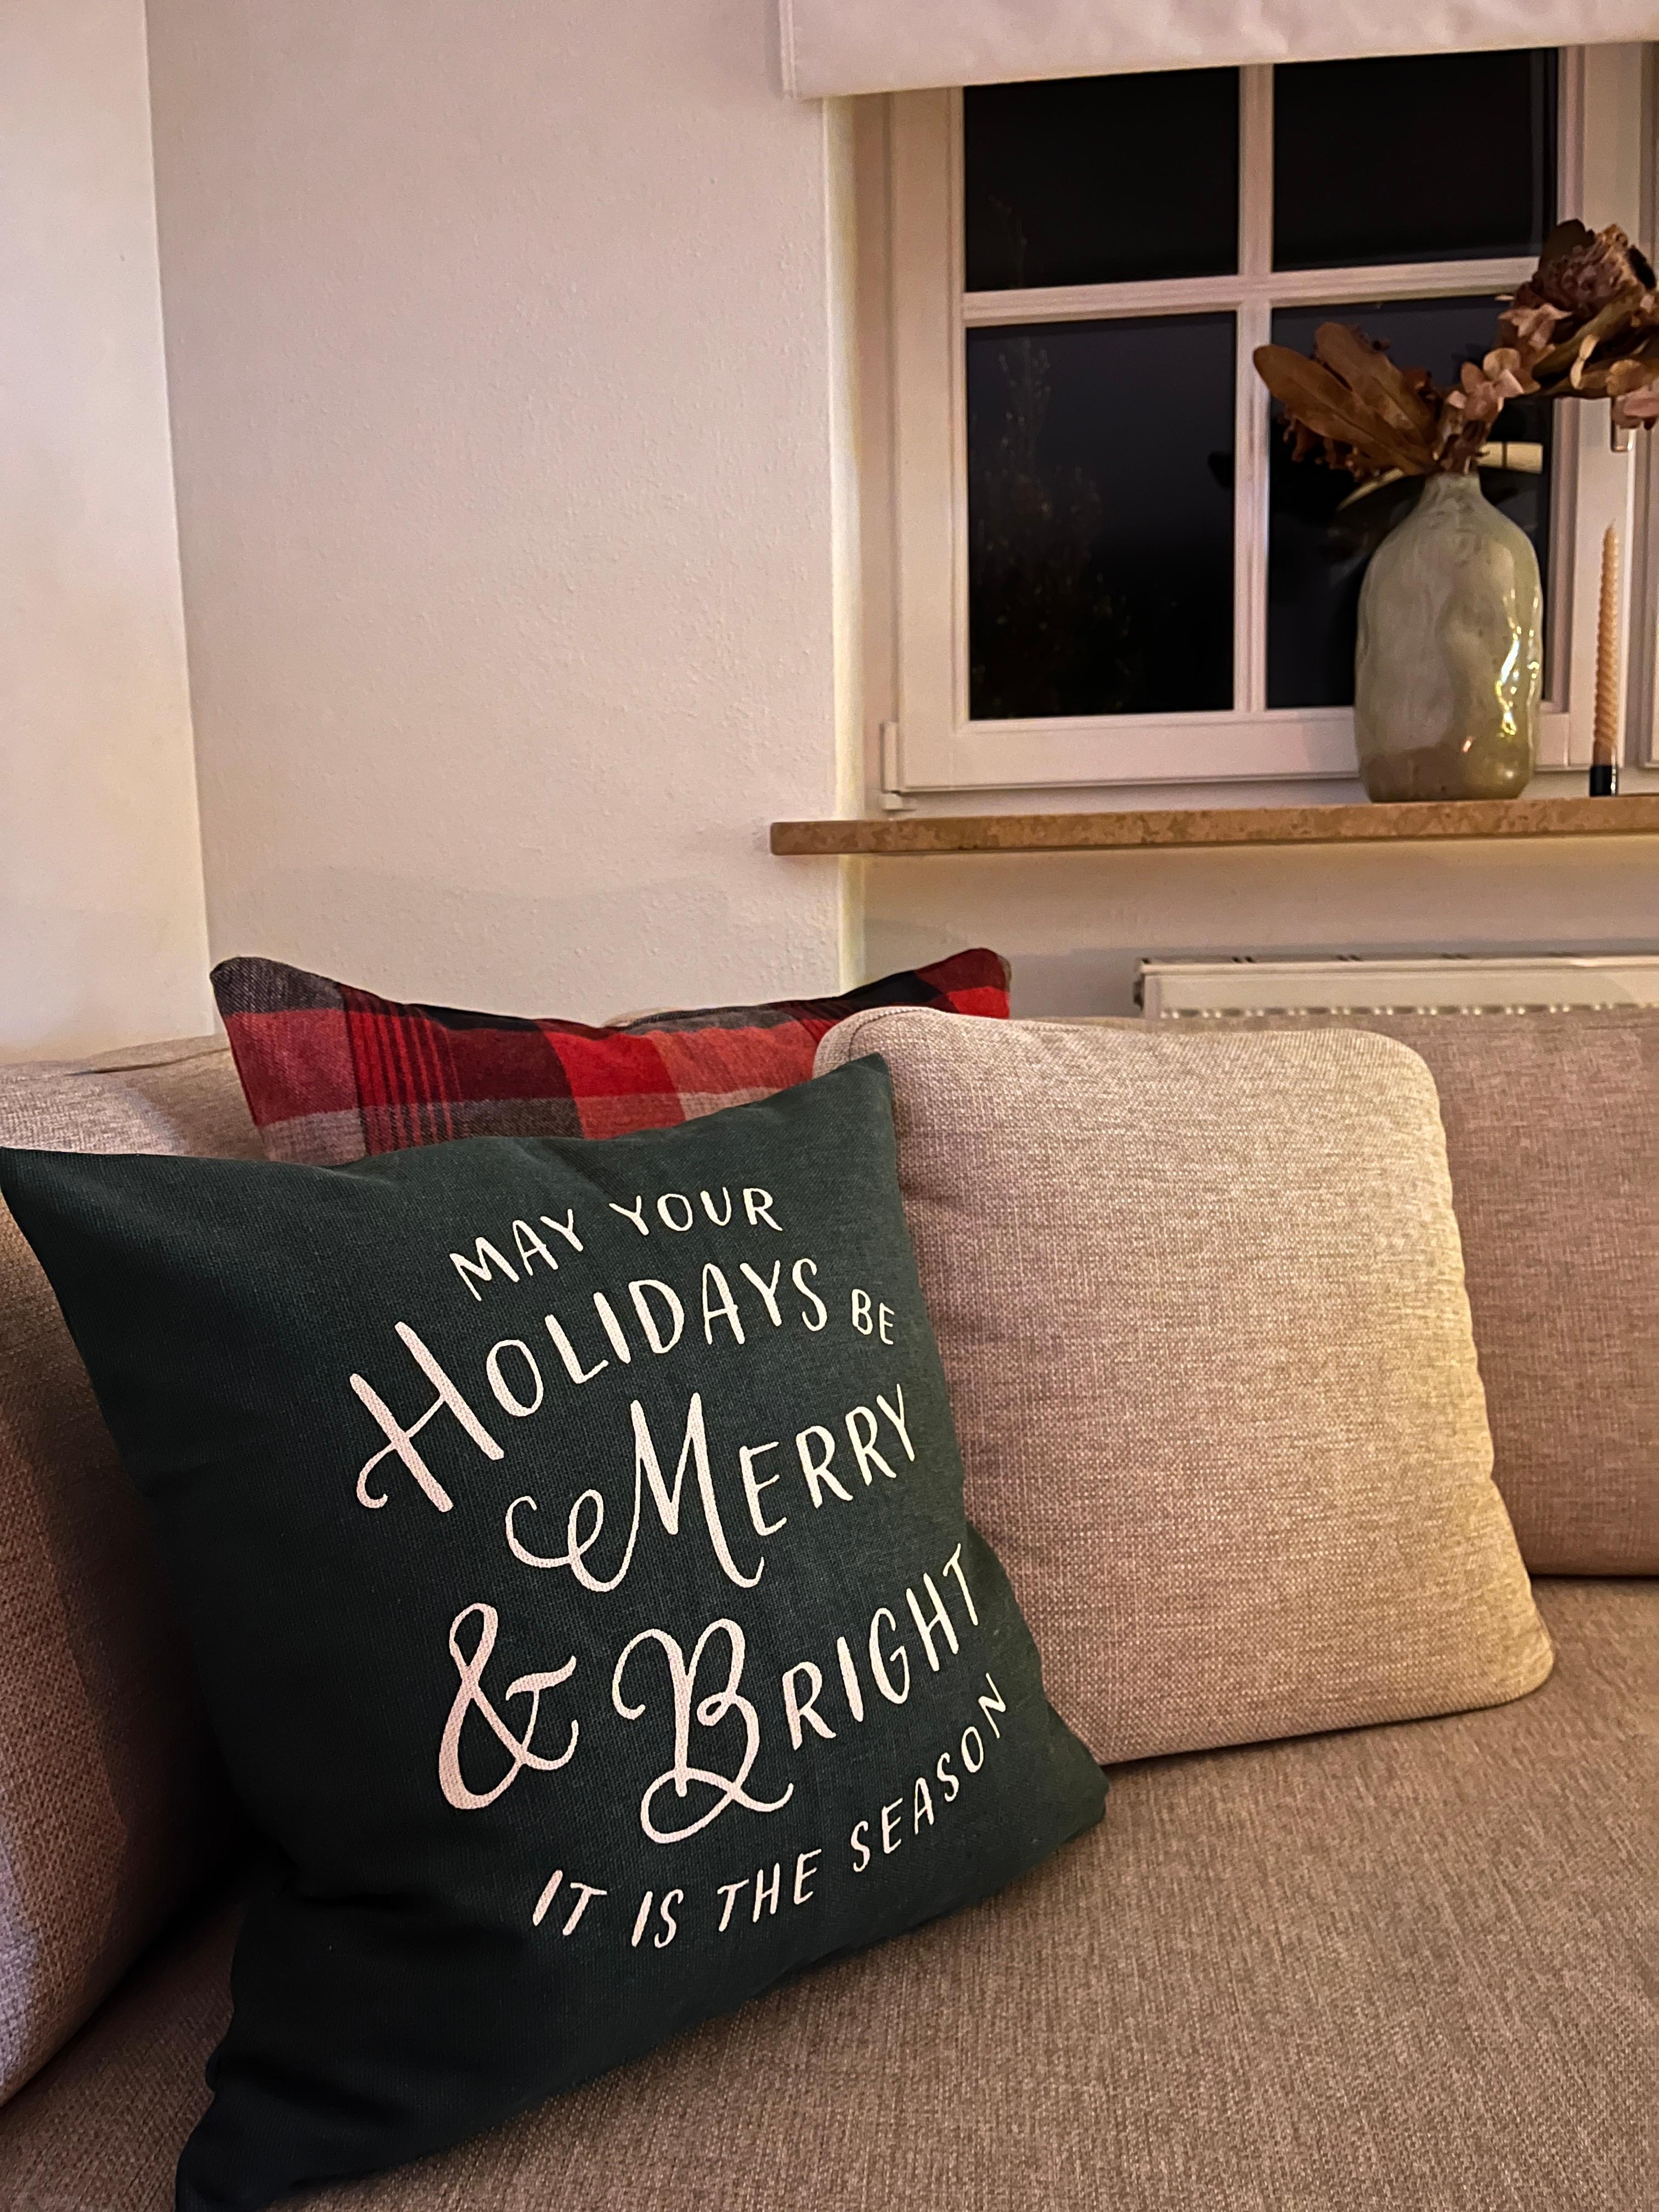 Countdown...🎄
#christmas#holidays#wohnzimmer#couch#ohtannenbaum#itstheseason#hollyjollychristmas#cozyevening